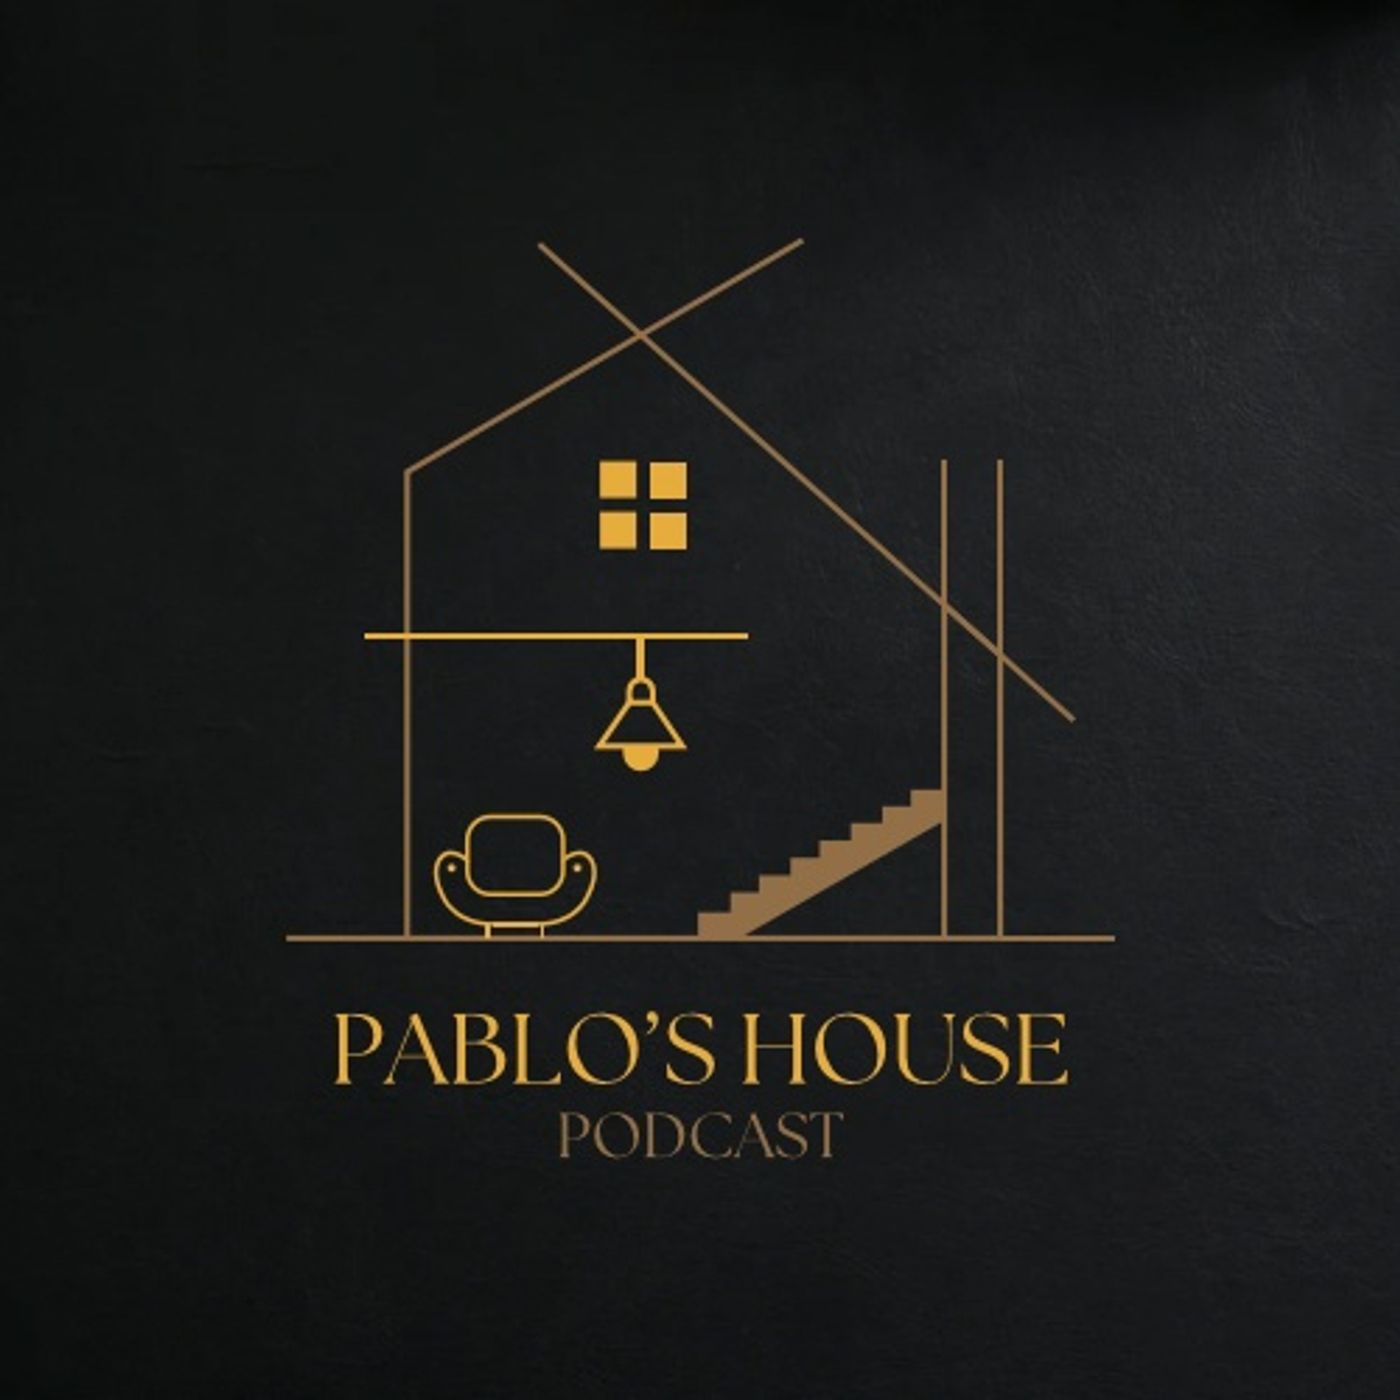 Pablo’s House Podcast